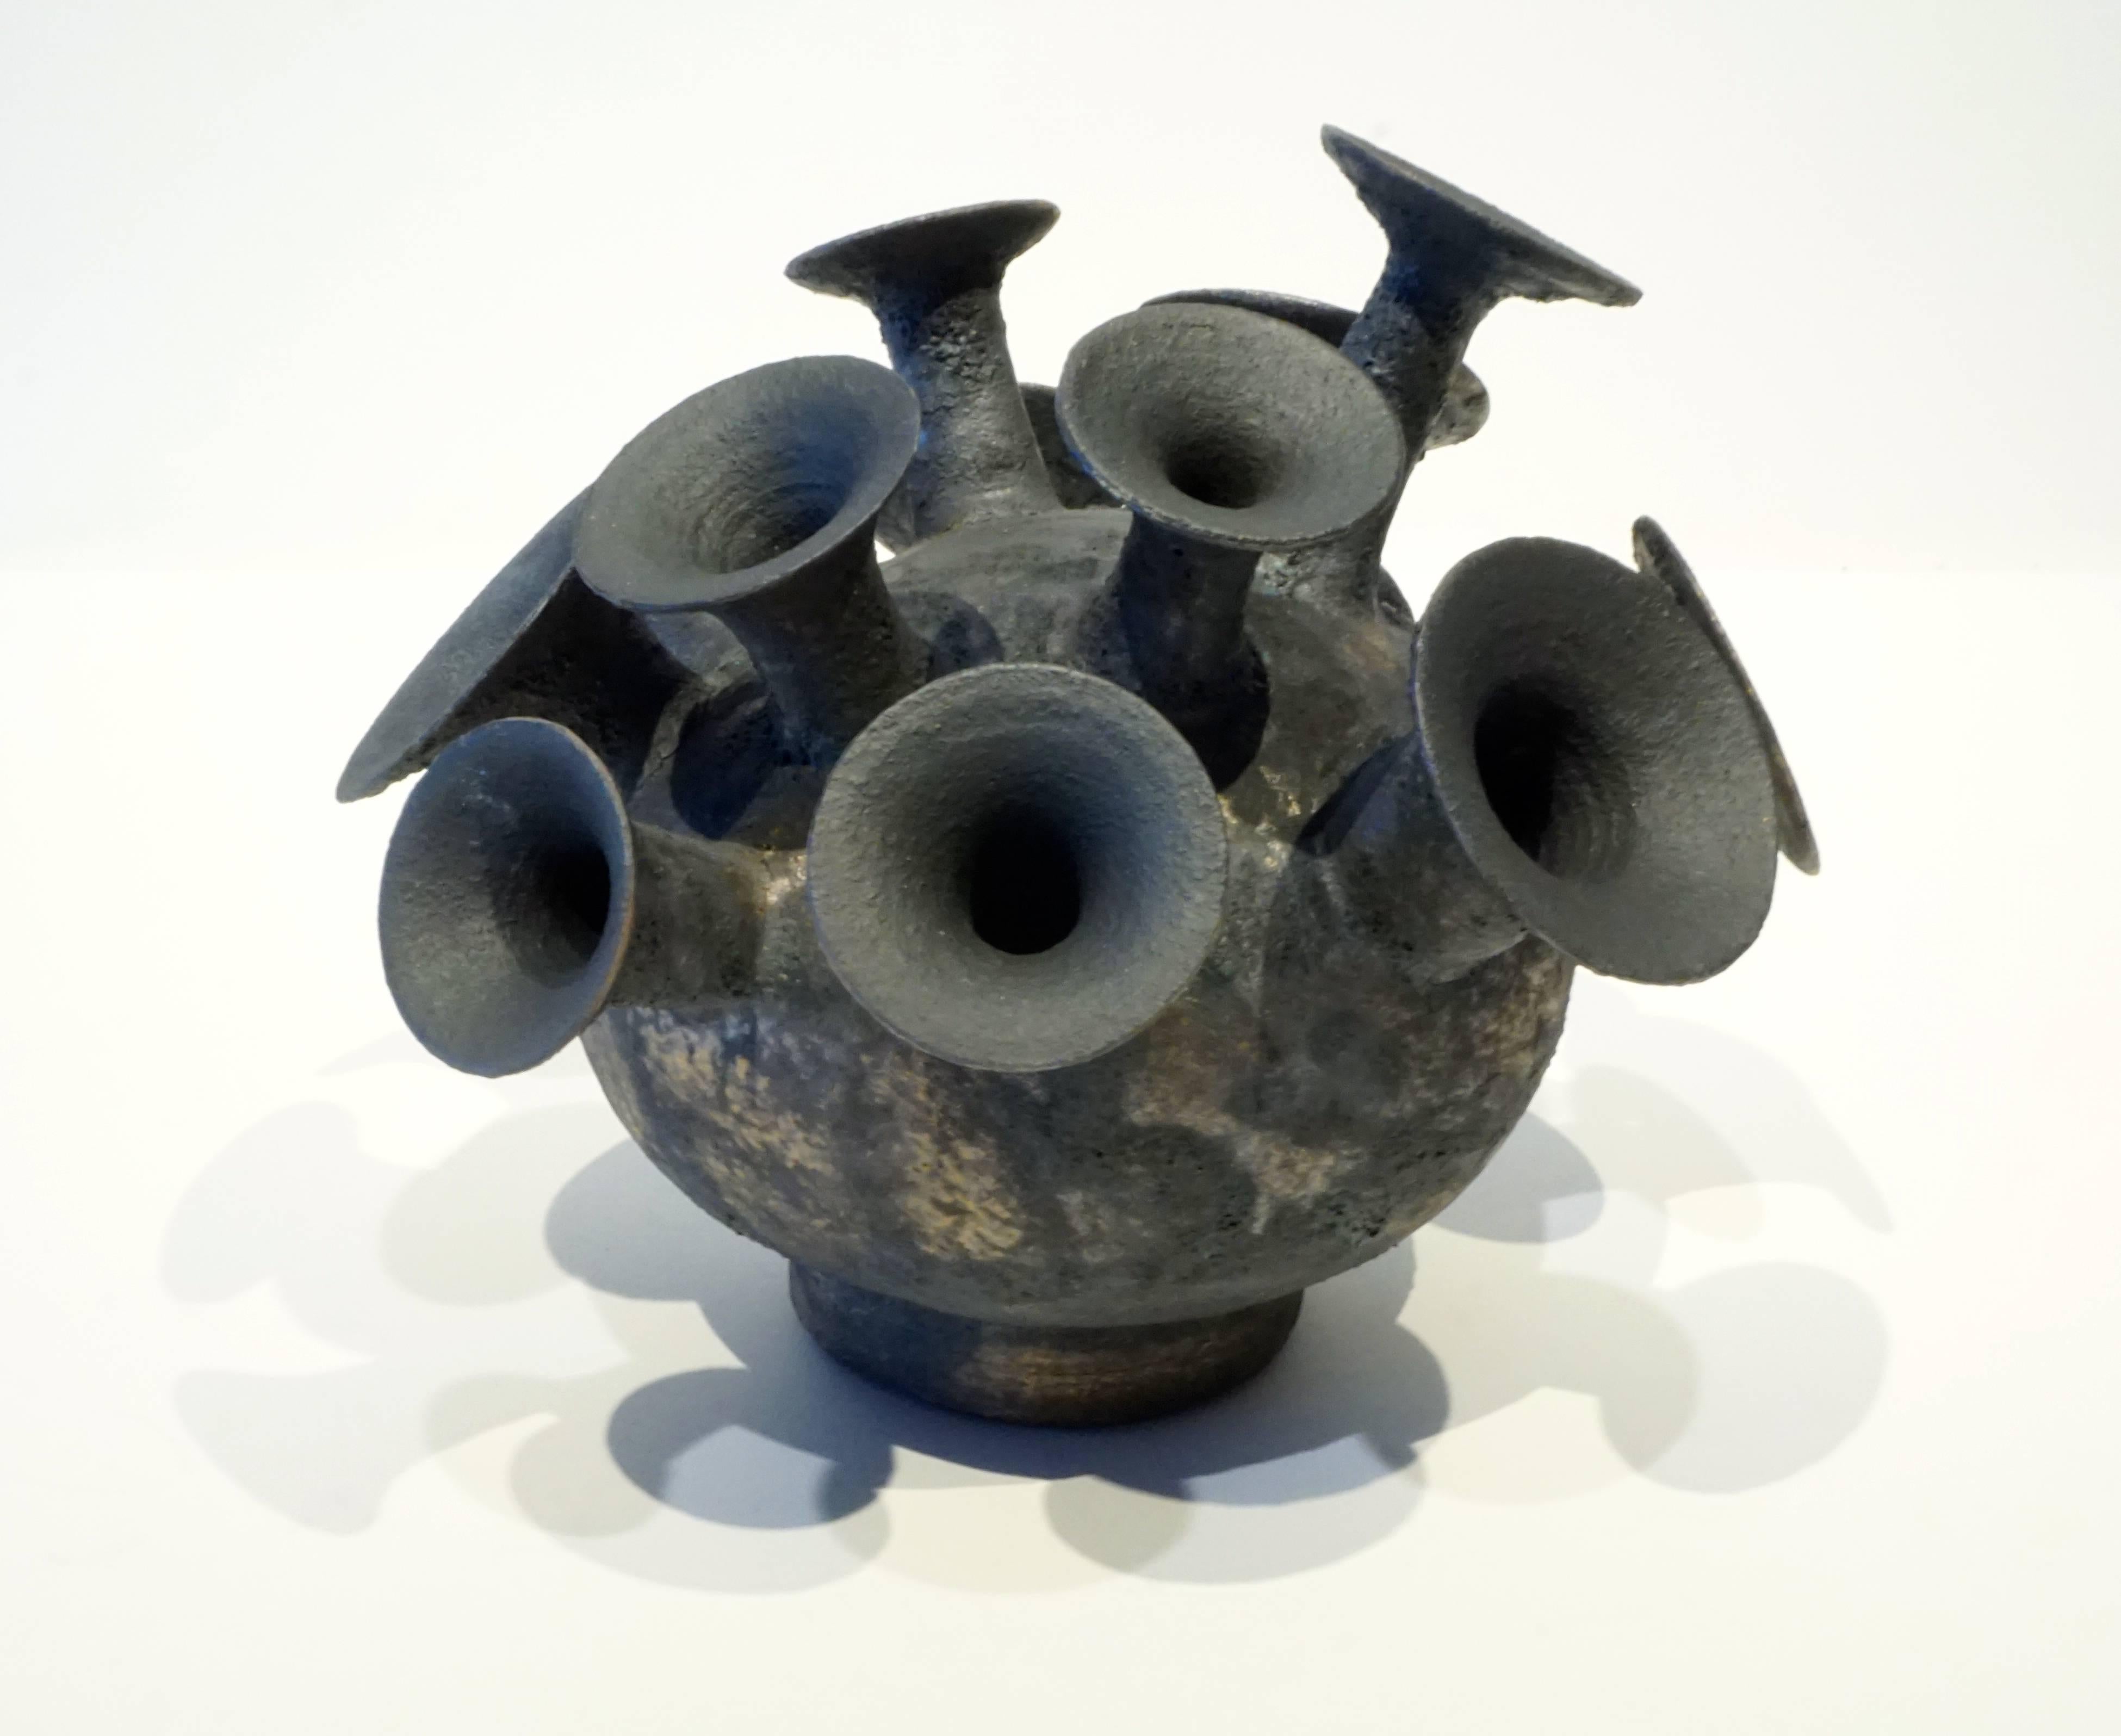 Modern Multi Spout Ceramic Vessel Sculpture by Studio Potter Jeremy Gercke, 2016